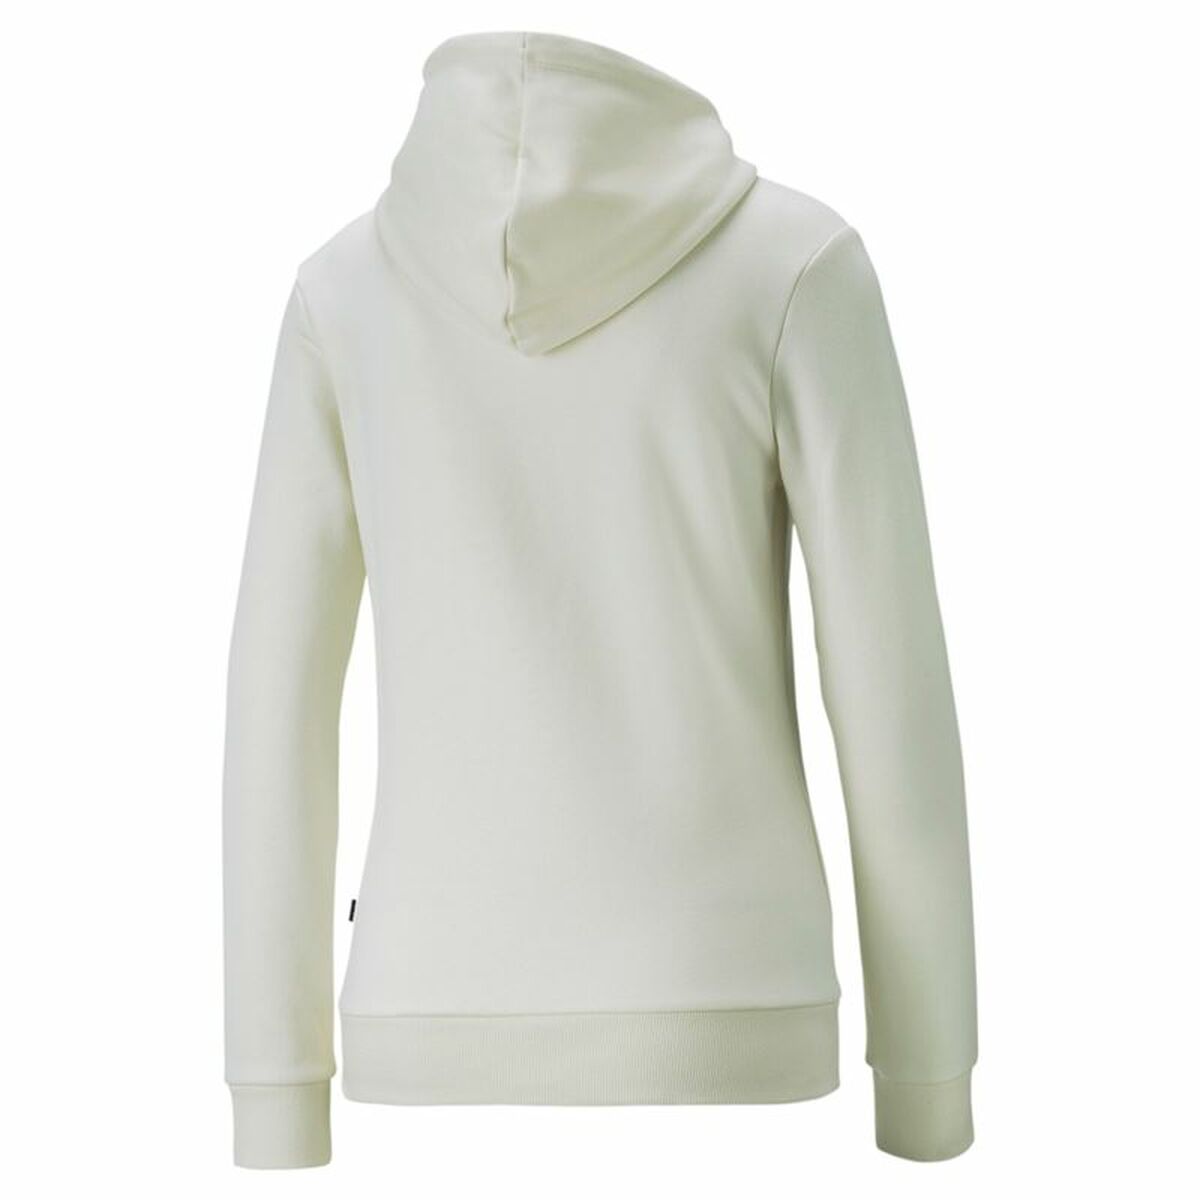 Kaufe Damen Sweater mit Kapuze Puma Weiß bei AWK Flagship um € 68.00